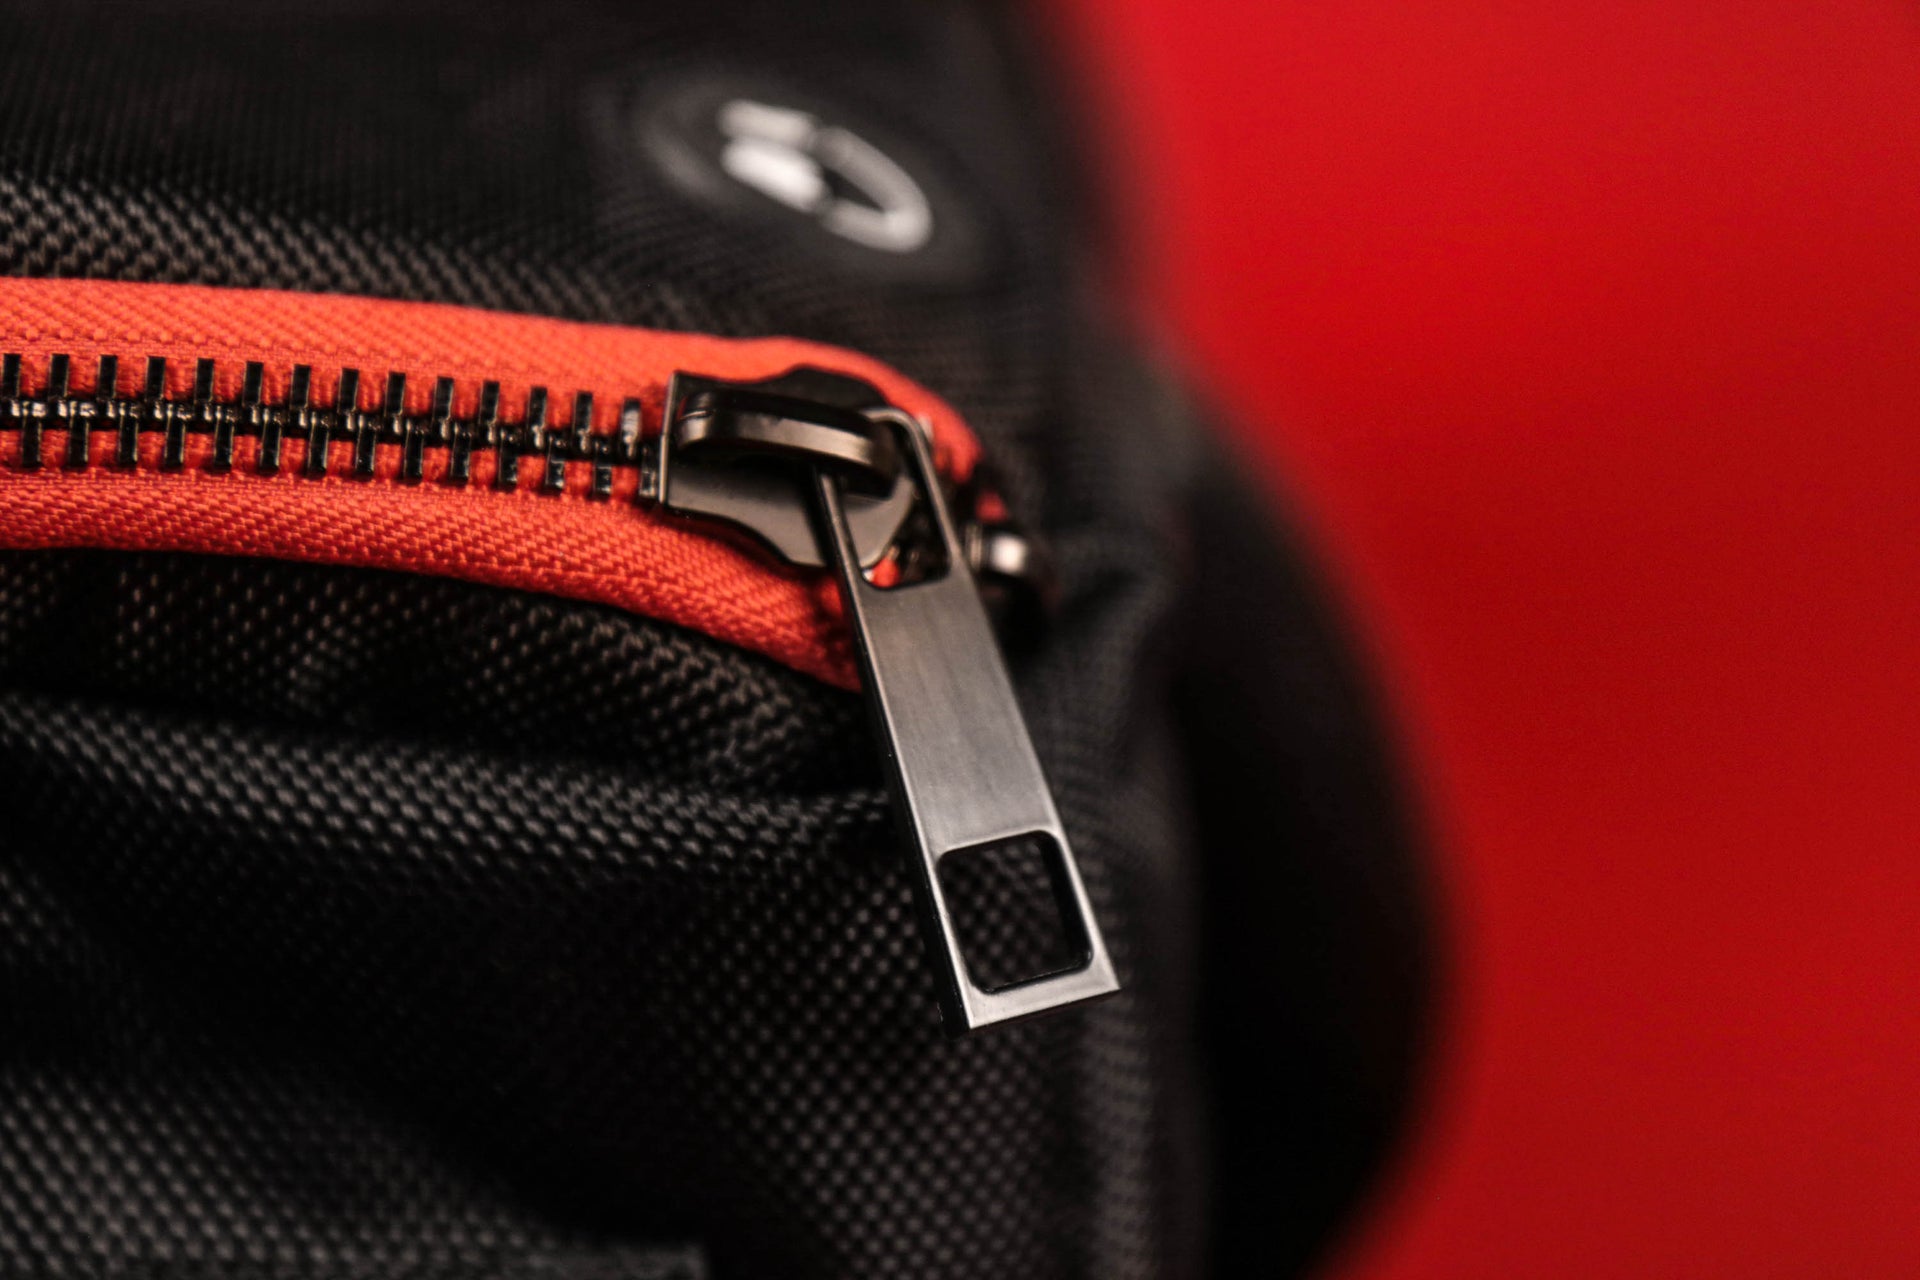 The Zipper on the Flight Pack Sneaker Duffle Bag To Match Bred 11s | Sneaker Duffel Travel Bag